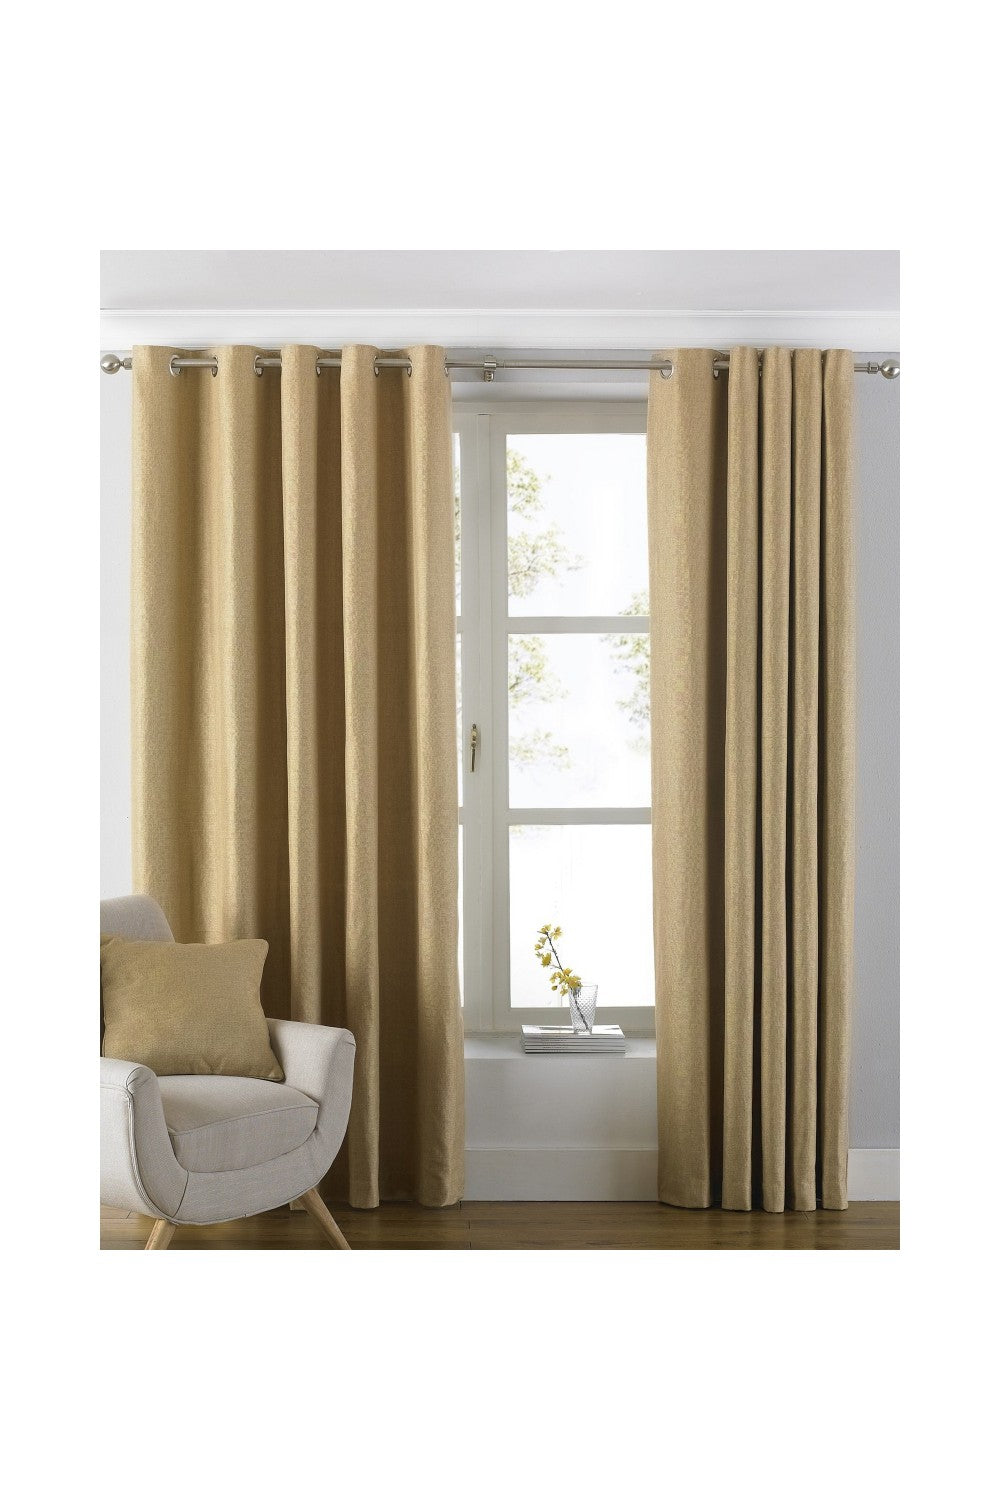 Riva Home Atlantic Eyelet Ringtop Curtains (Ochre) (90 x 72inch)